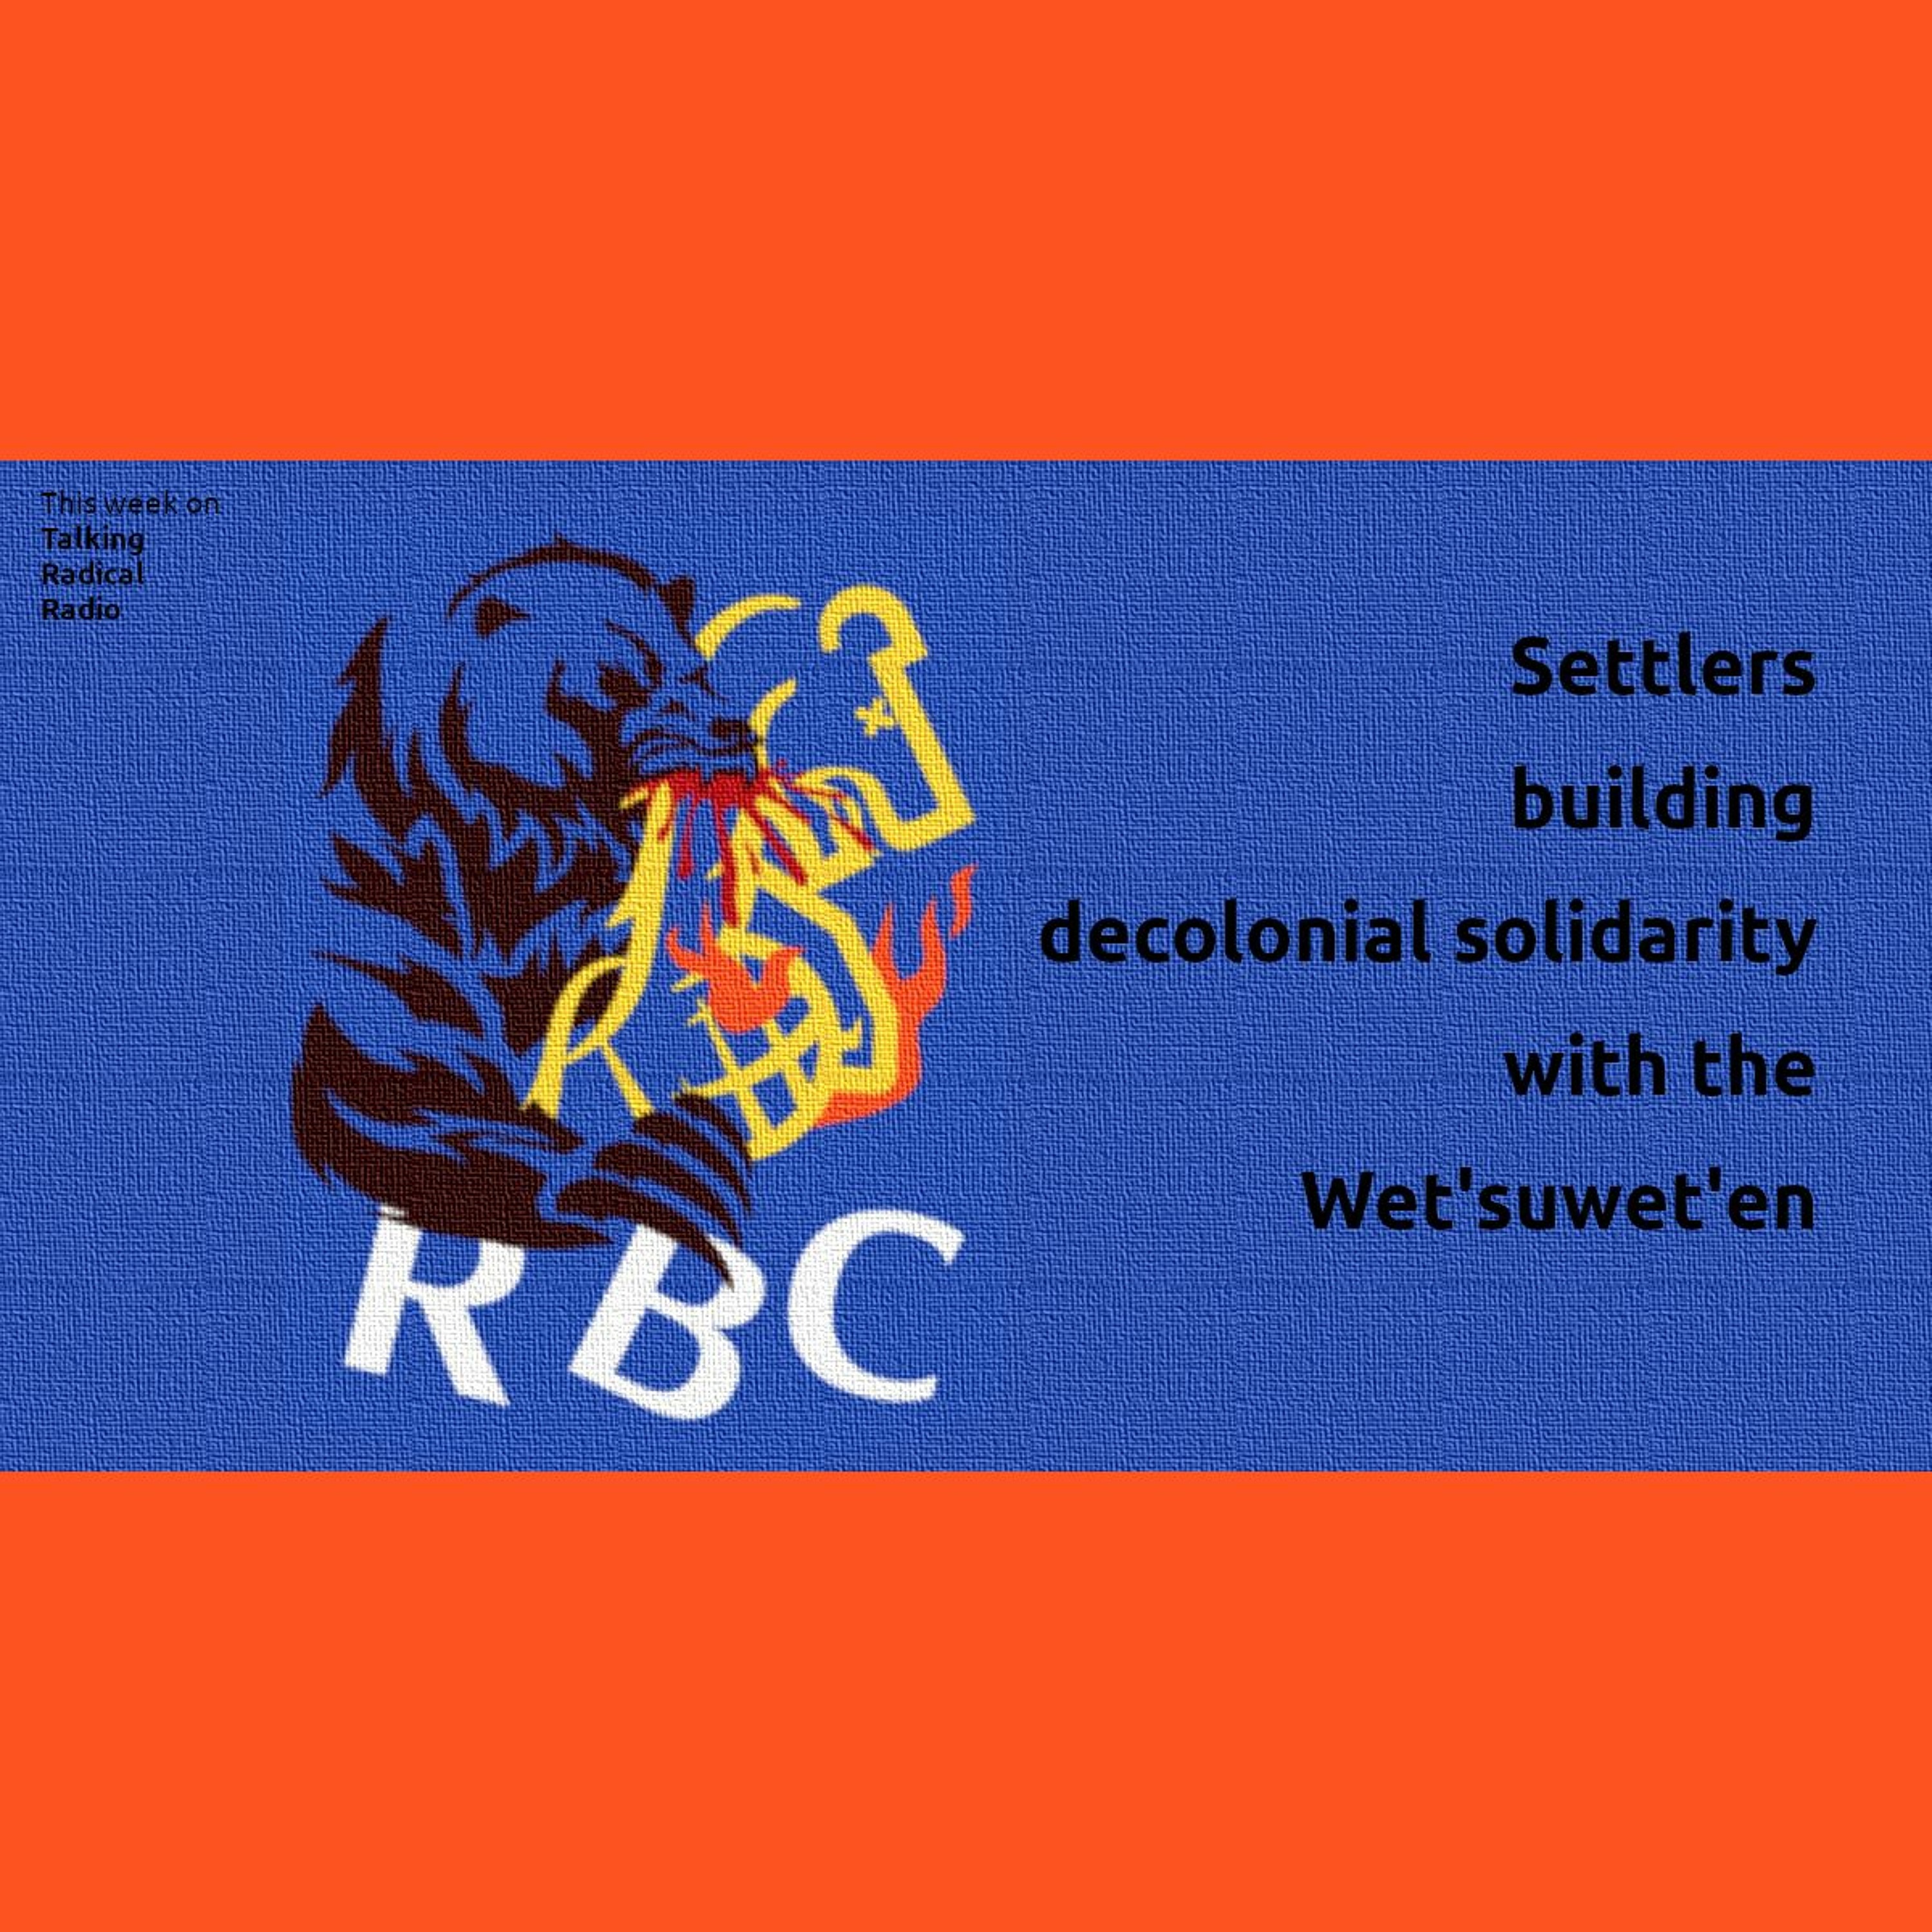 Settlers building decolonial solidarity with the Wet'suwet'en